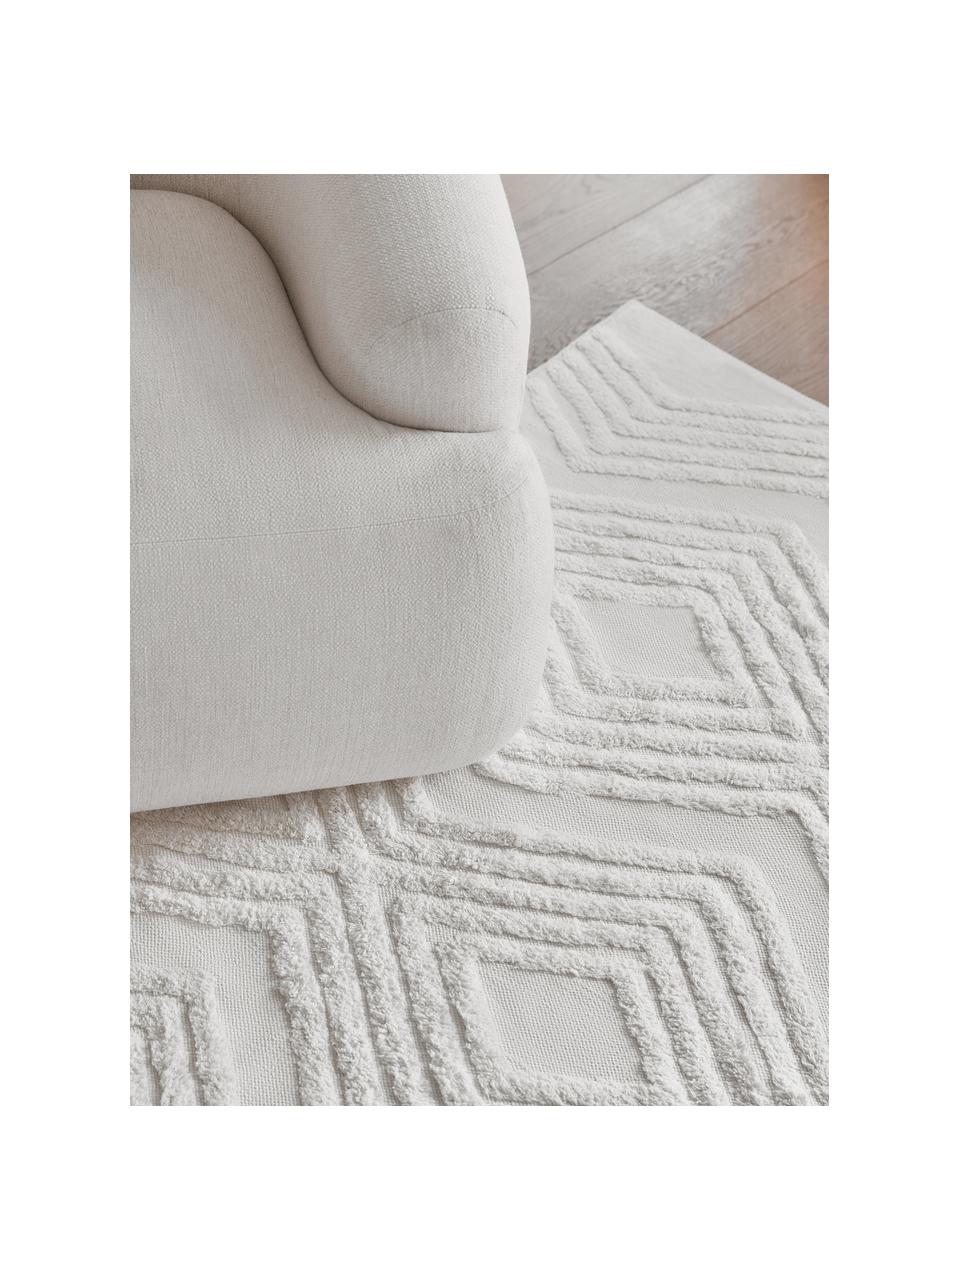 Alfombra artesanal de algodón texturizada Ziggy, 100% algodón, Crema, An 160 x L 230 cm (Tamaño M)